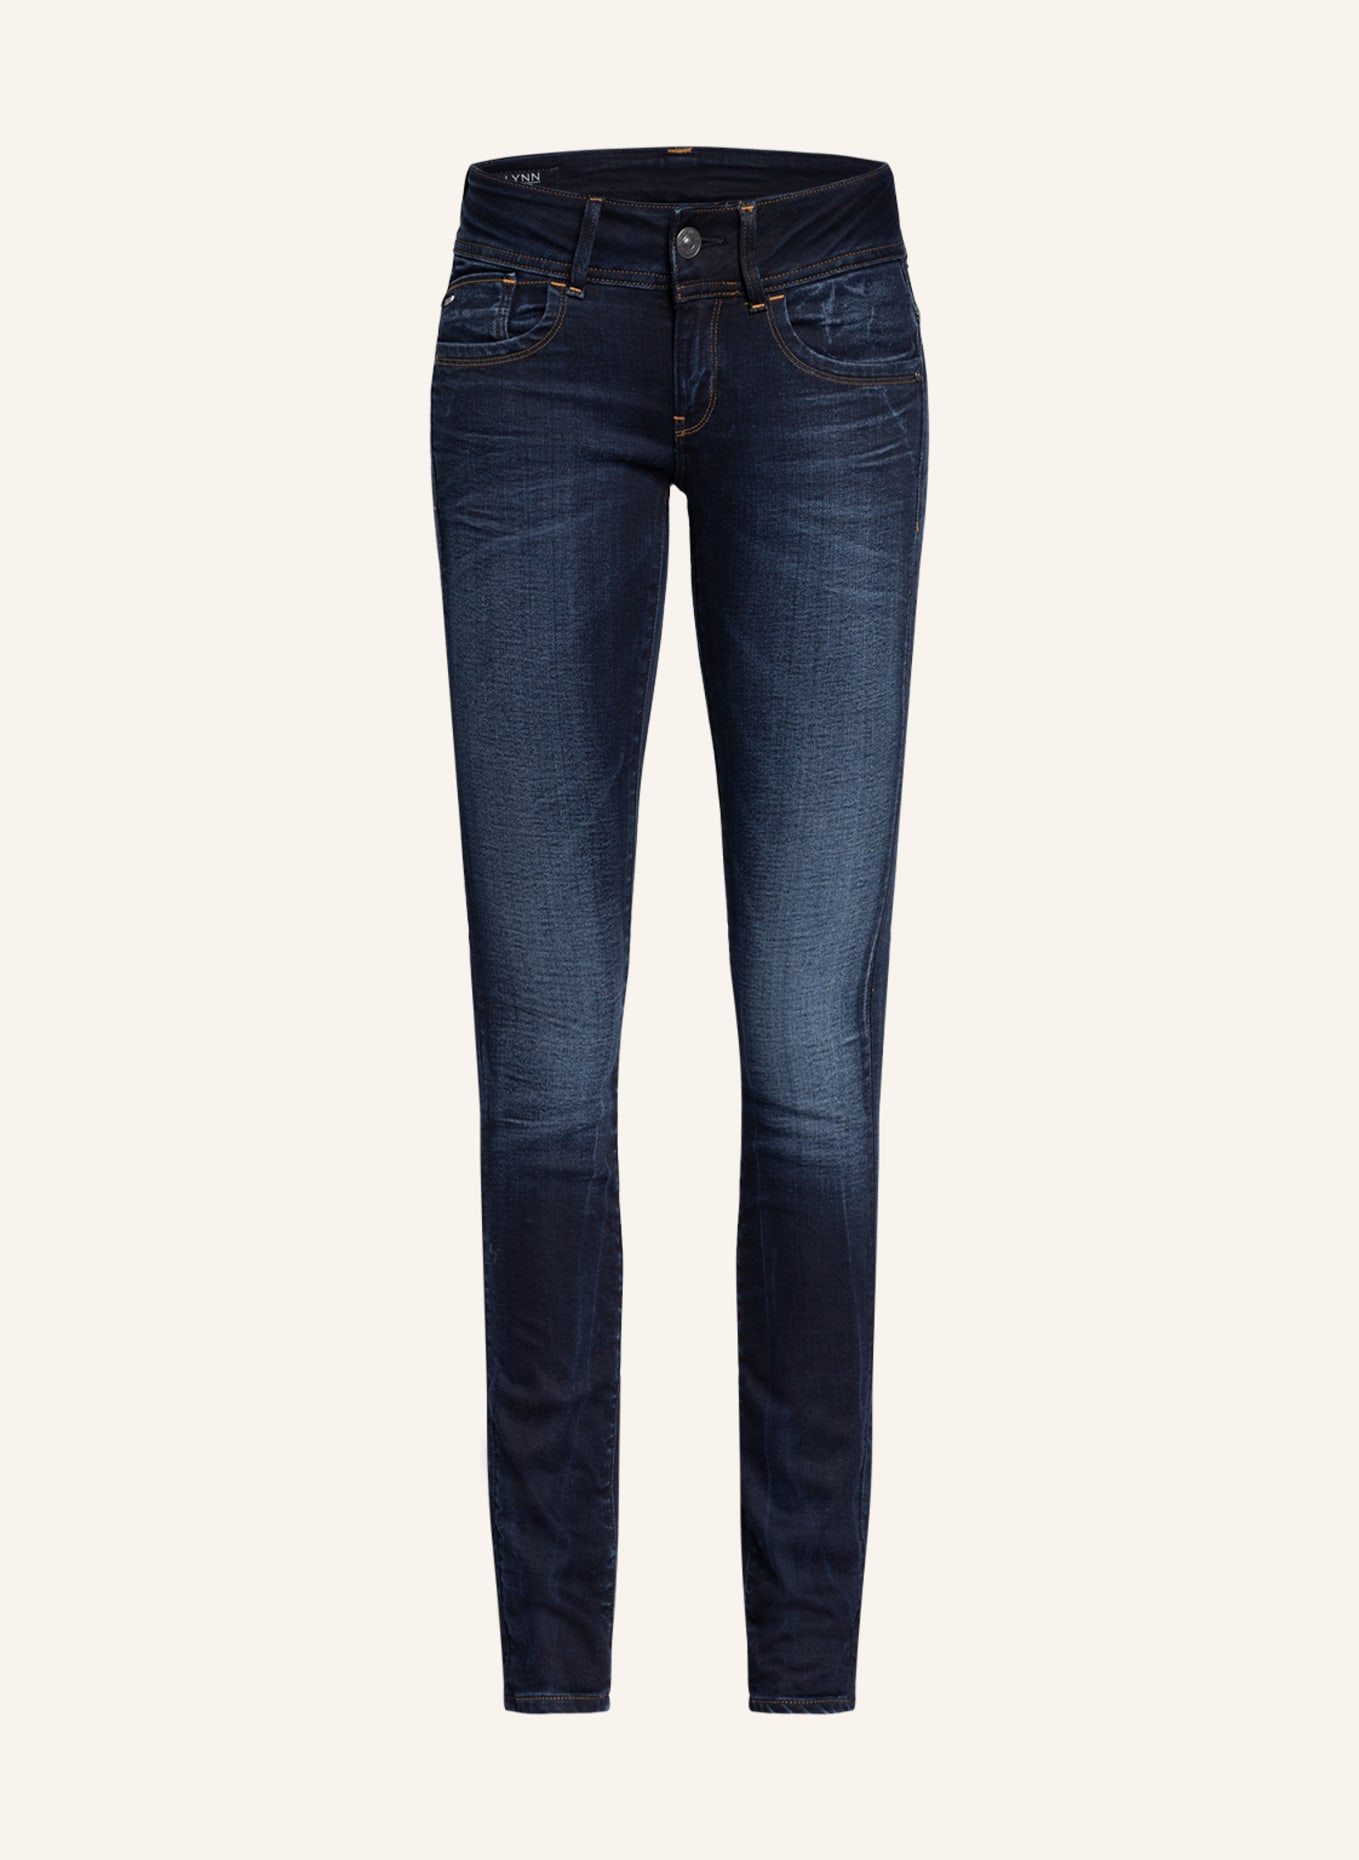 G-Star RAW Skinny Jeans LYNN, Farbe: 071 MEDIUM AGED (Bild 1)